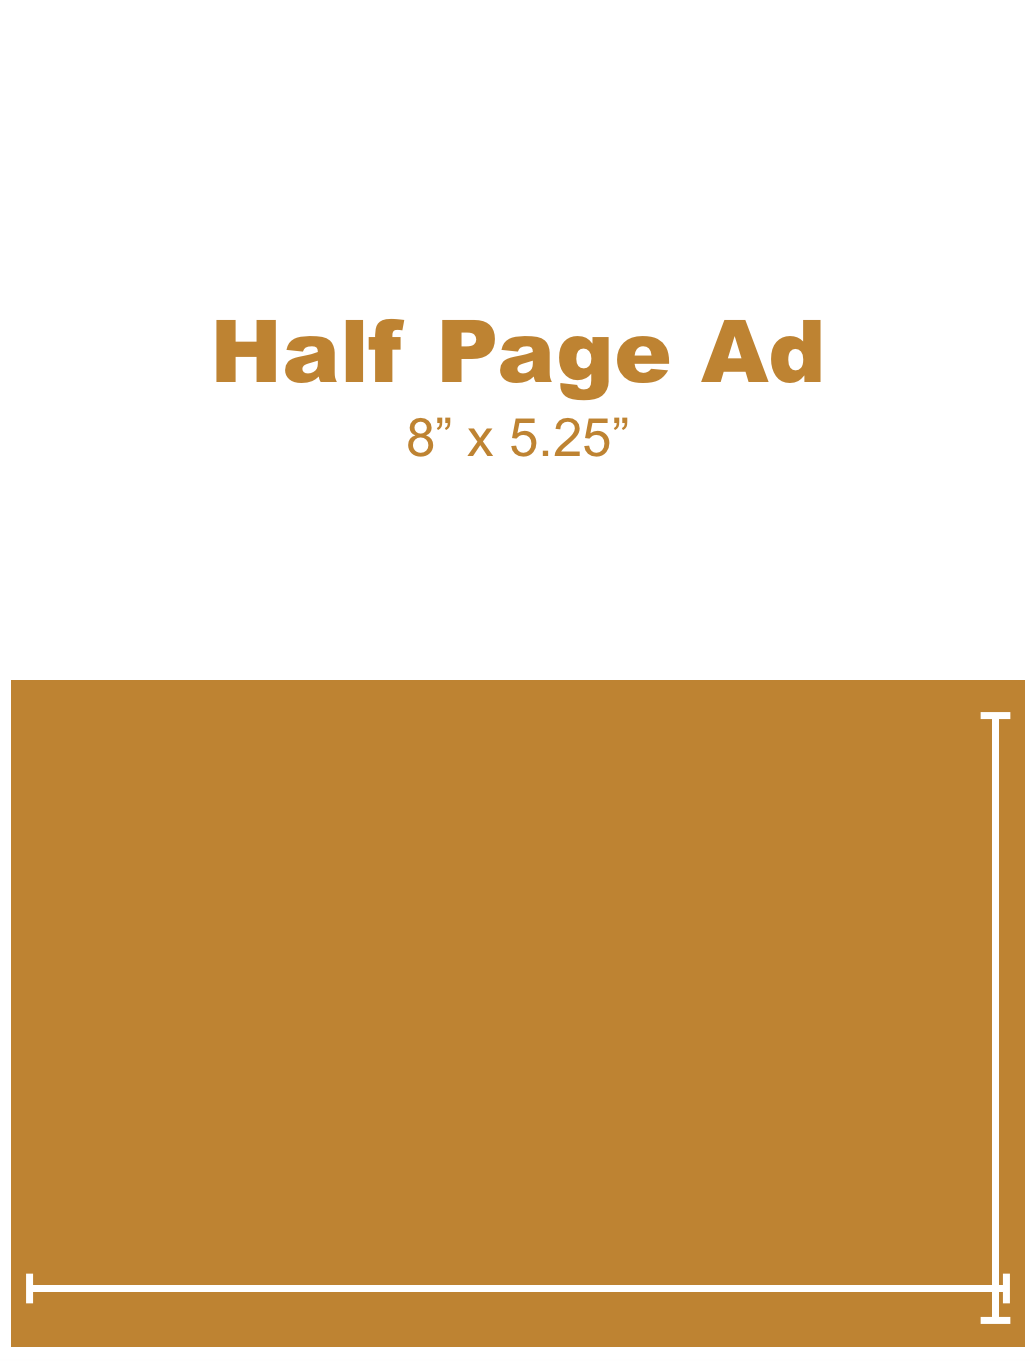 Half Page Ad - Print